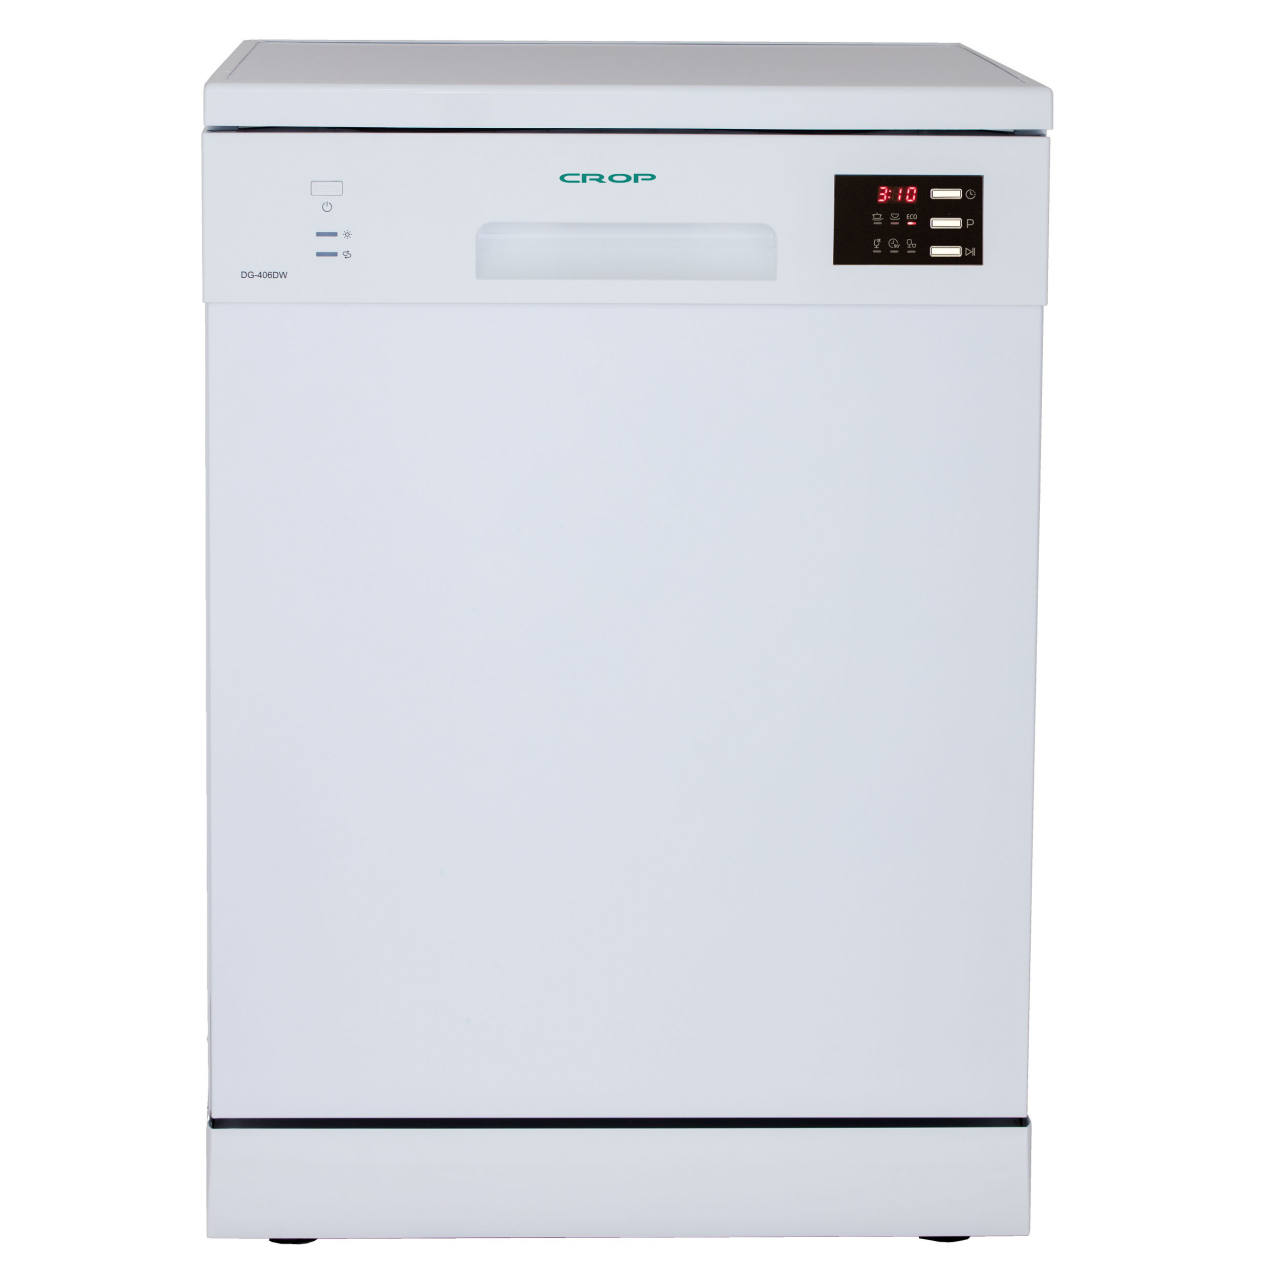 ماشين ظرفشویی کروپ-Crop ماشین ظرفشویی مدل DMC-2140